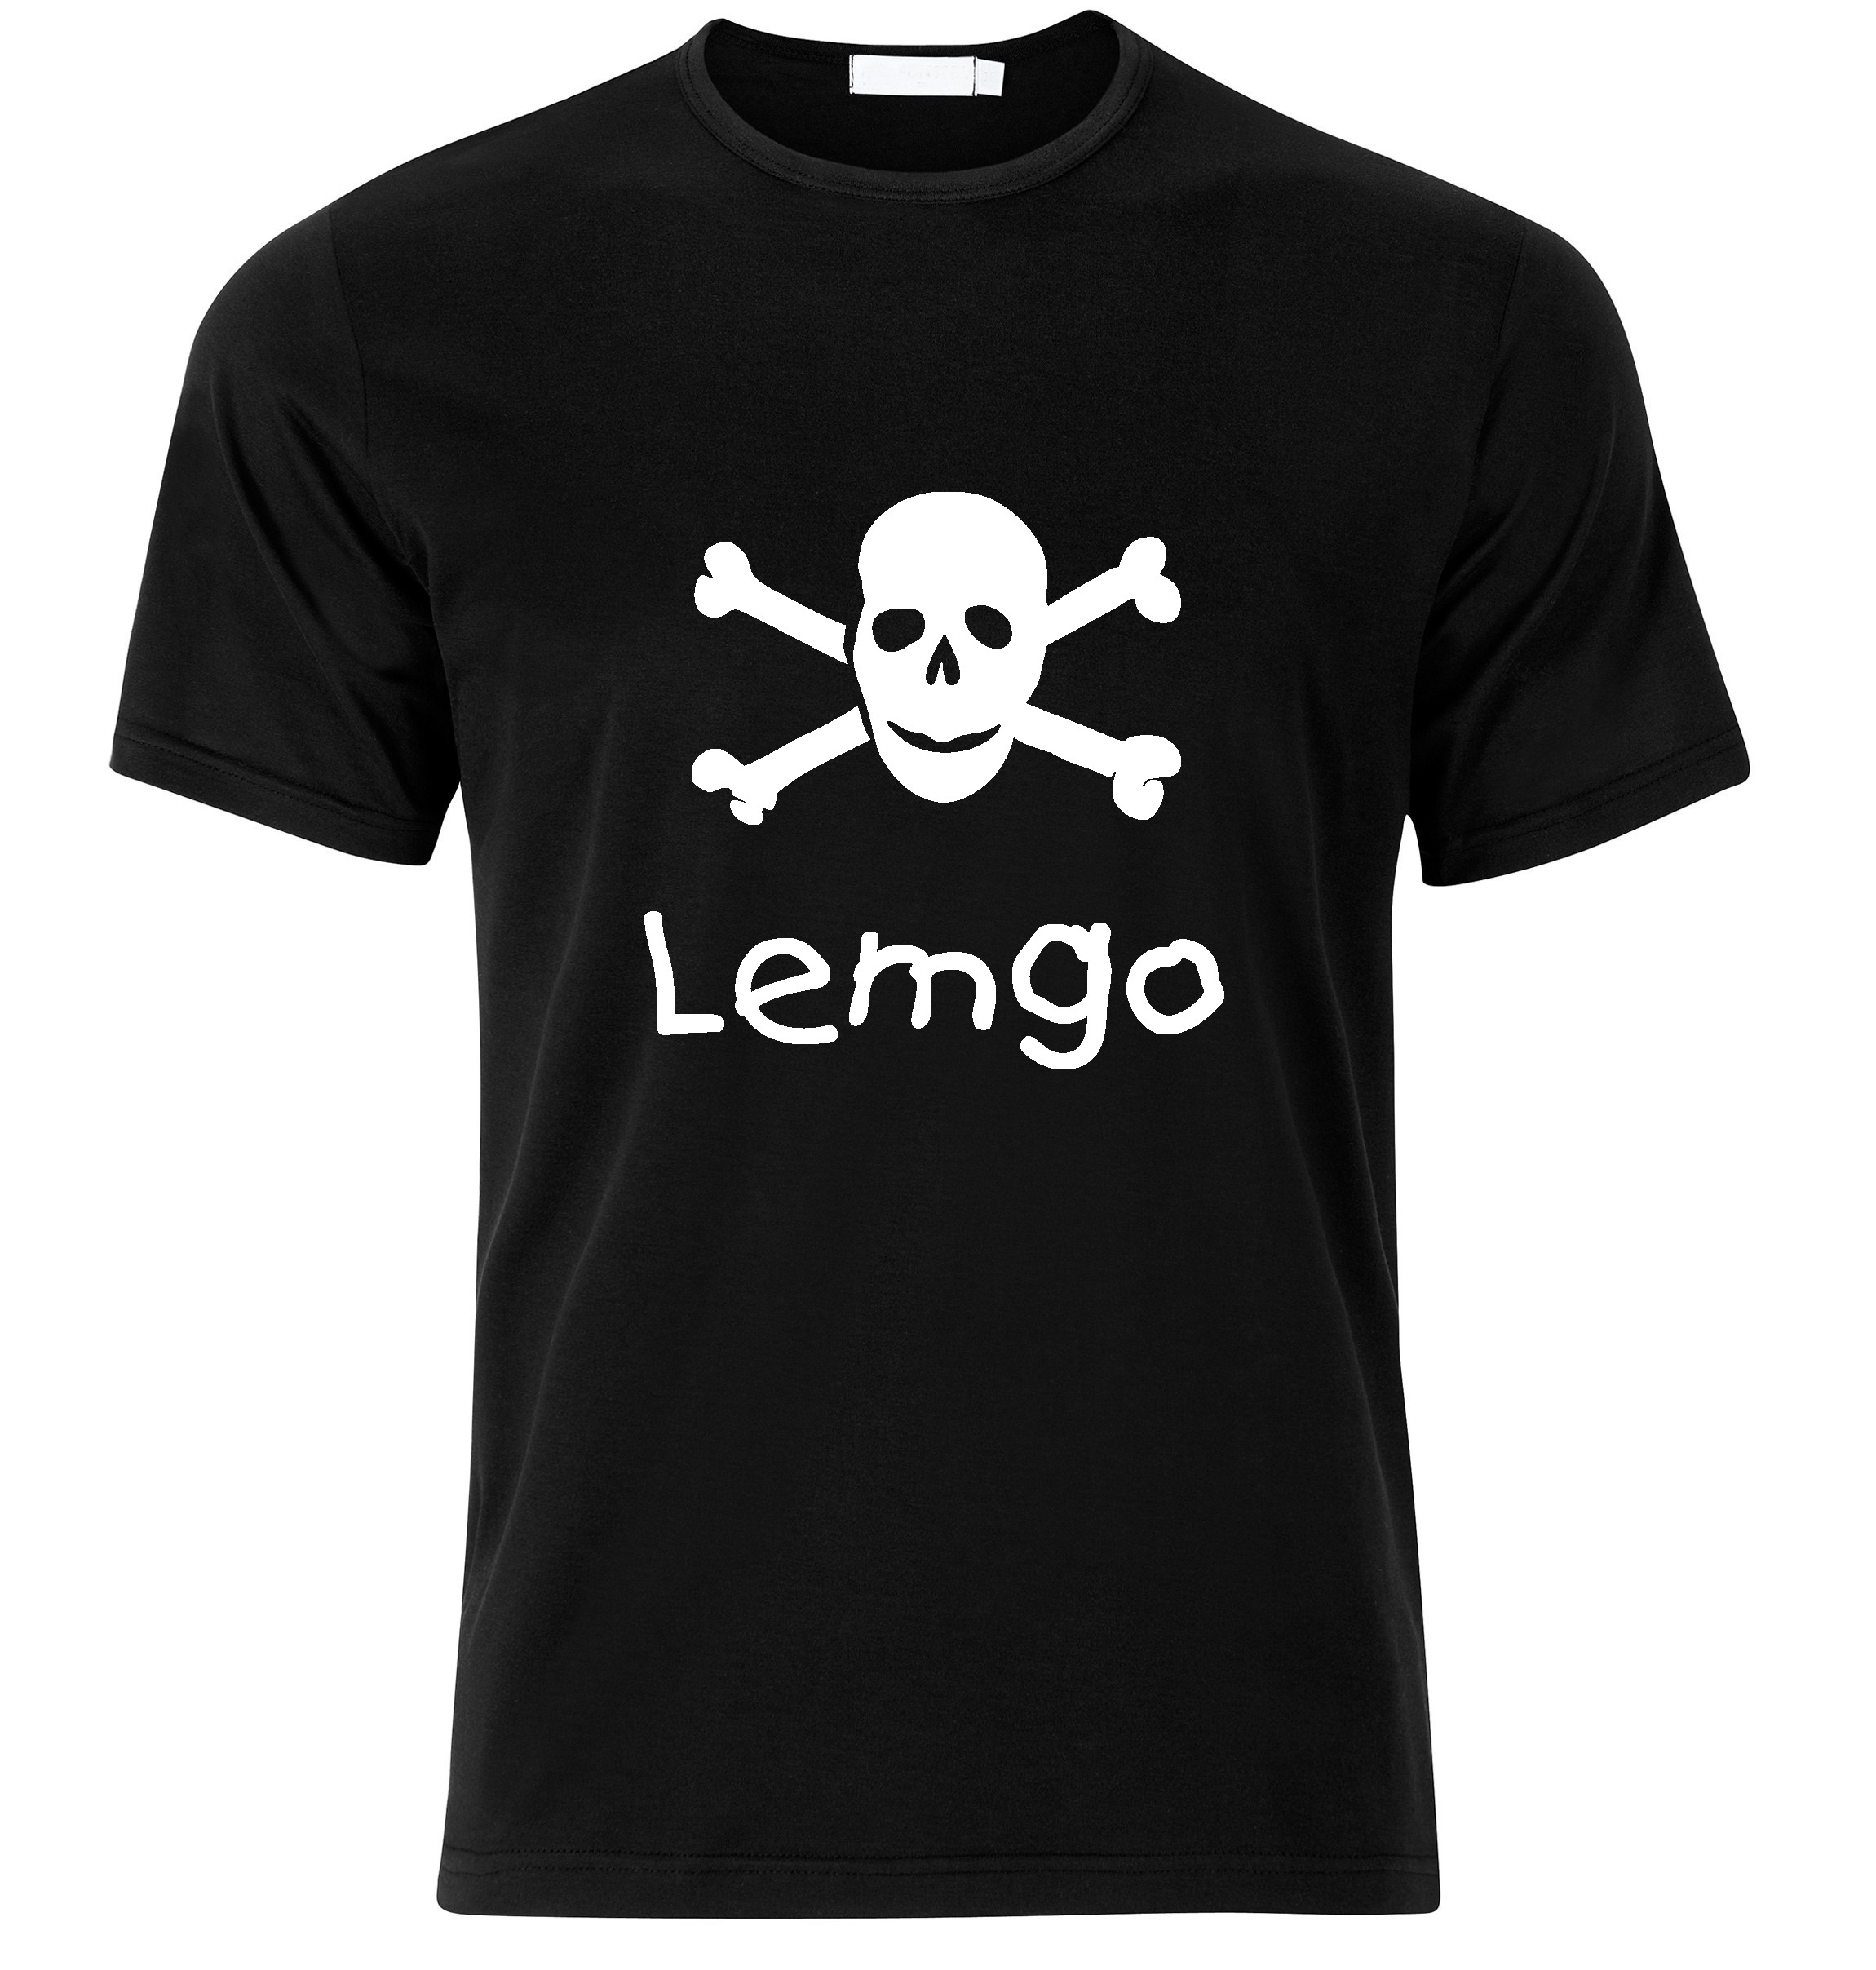 T-Shirt Lemgo Jolly Roger, Totenkopf